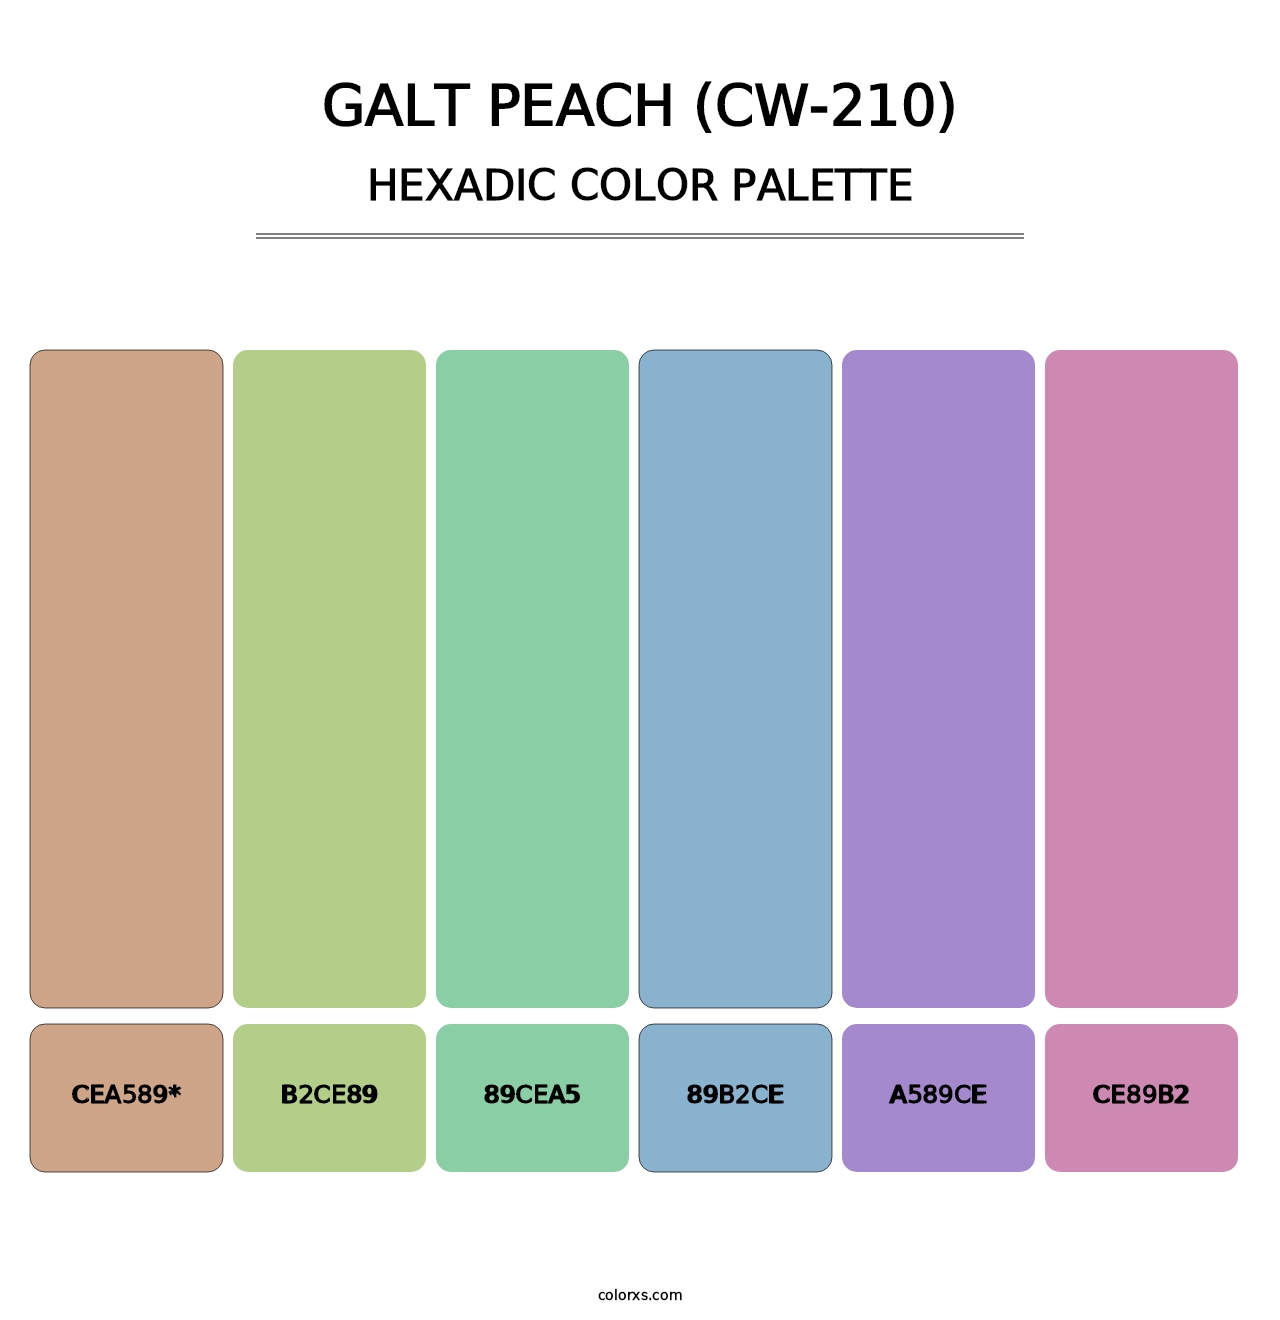 Galt Peach (CW-210) - Hexadic Color Palette